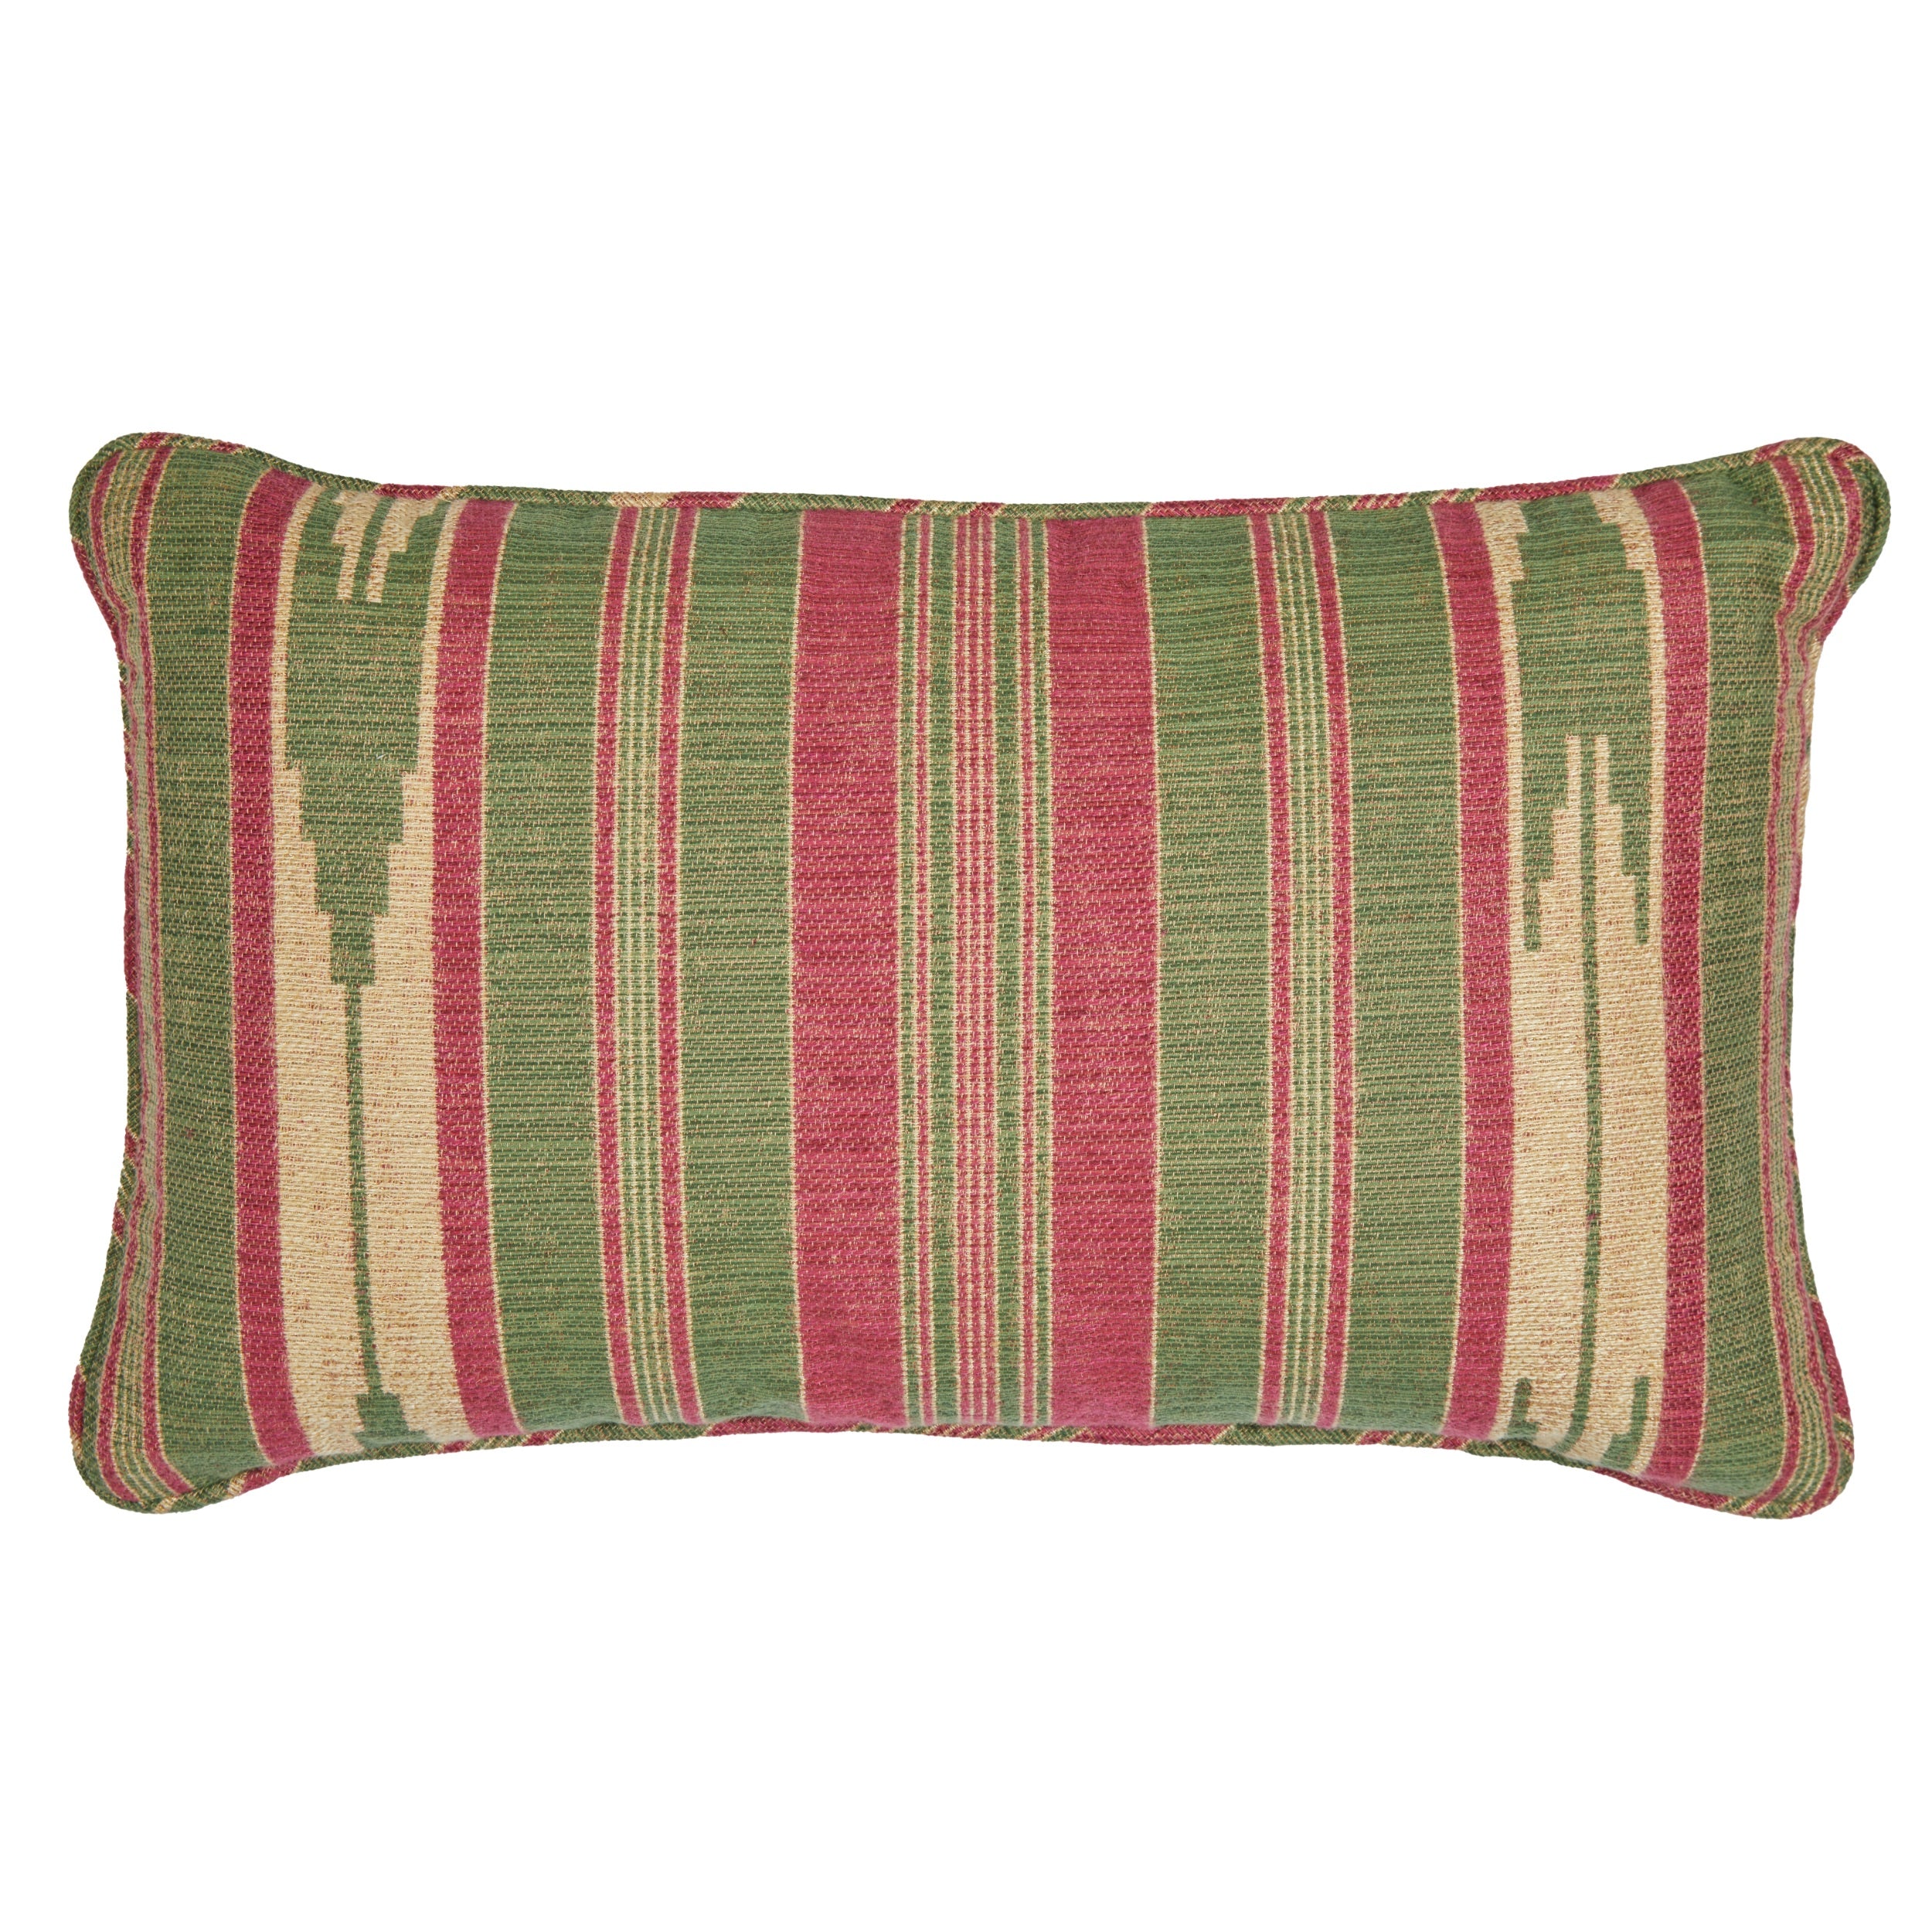 Oulton Stripe Rhubarb Cushion with Self Piping